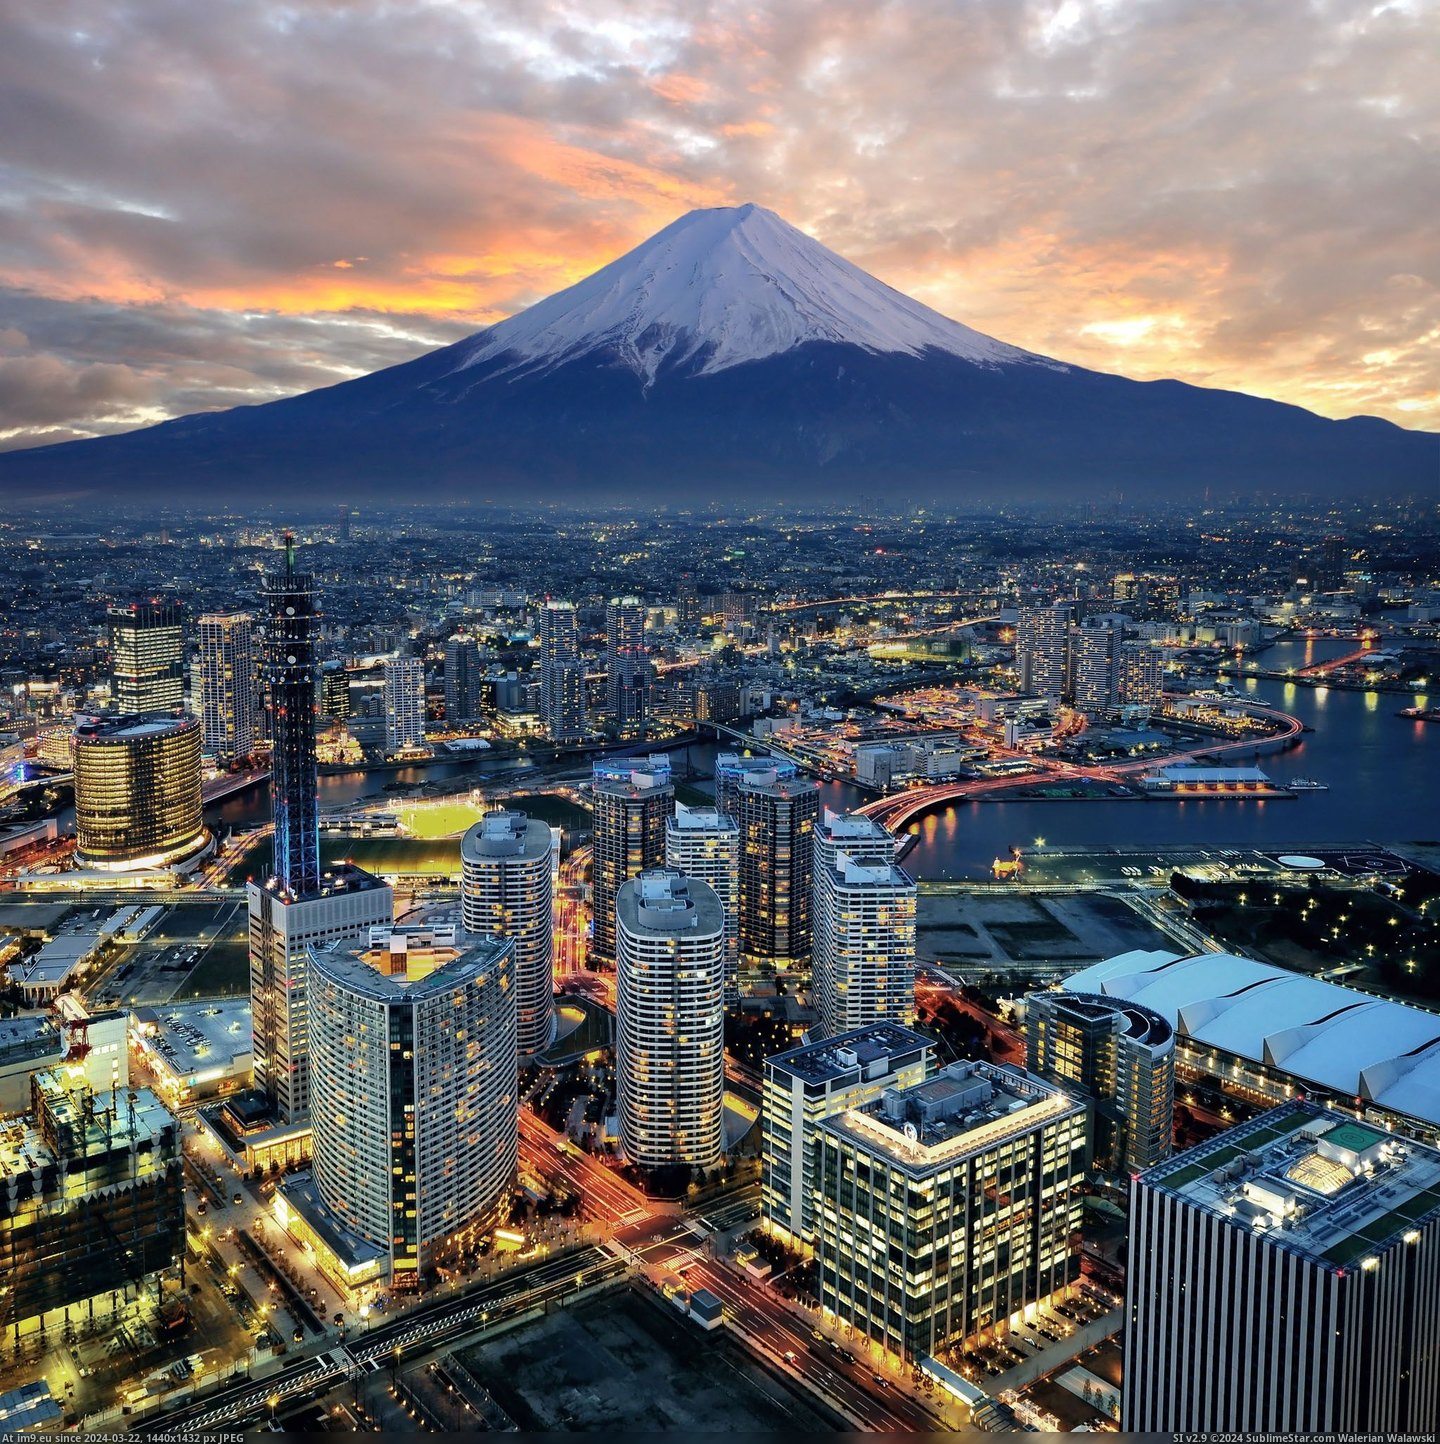 #Fuji #Yokohama #Overlooking [Pics] Mt. Fuji overlooking Yokohama Pic. (Image of album My r/PICS favs))